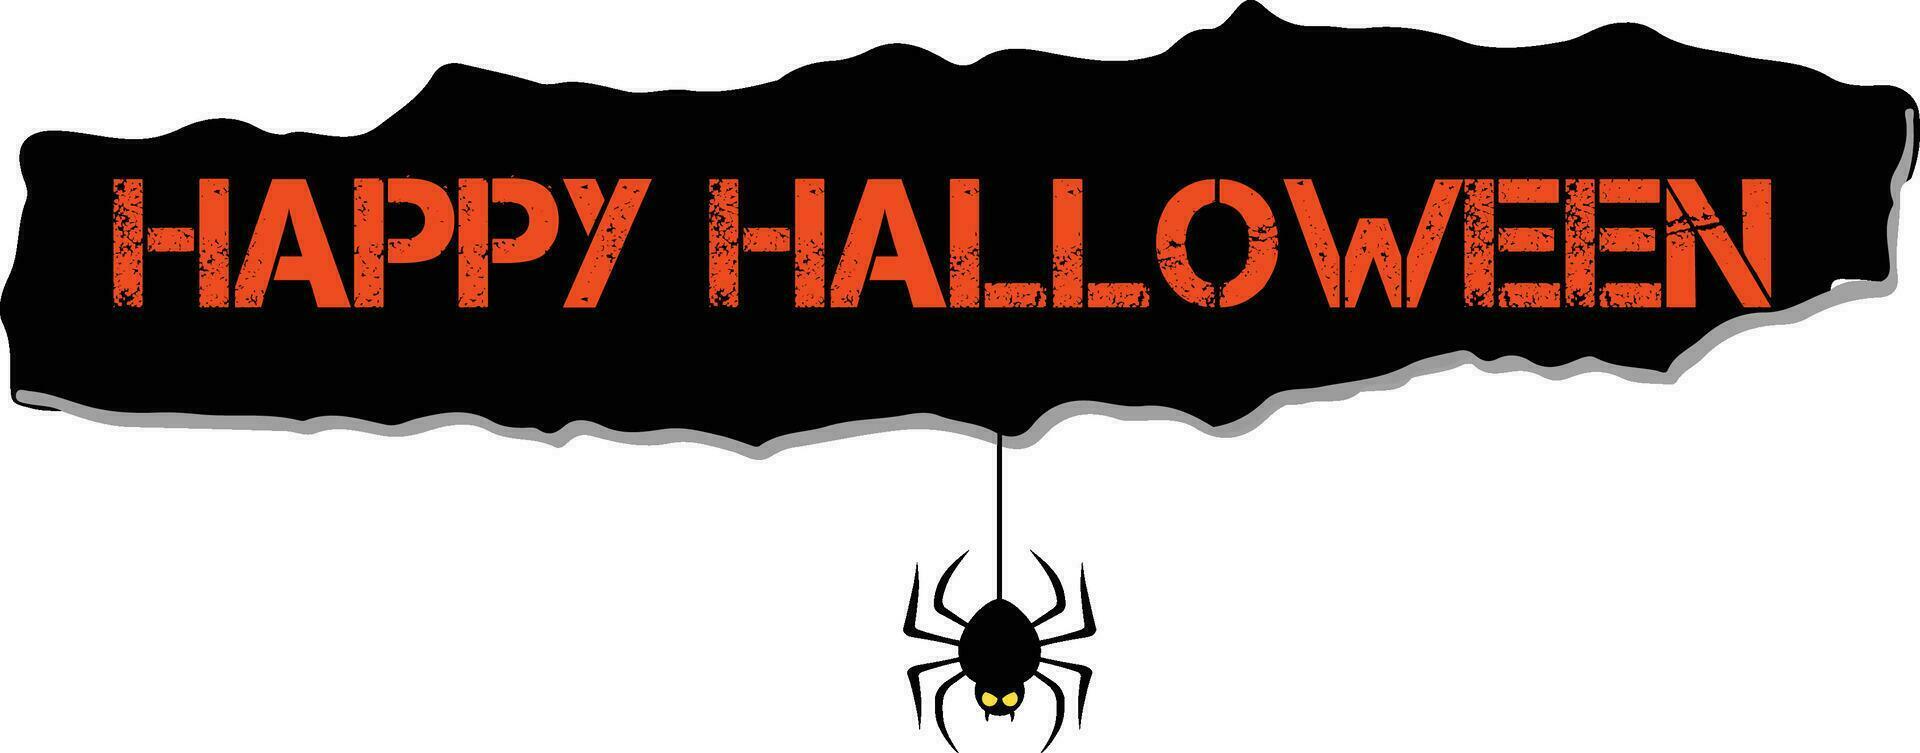 Happy Halloween Text Design vector illustration